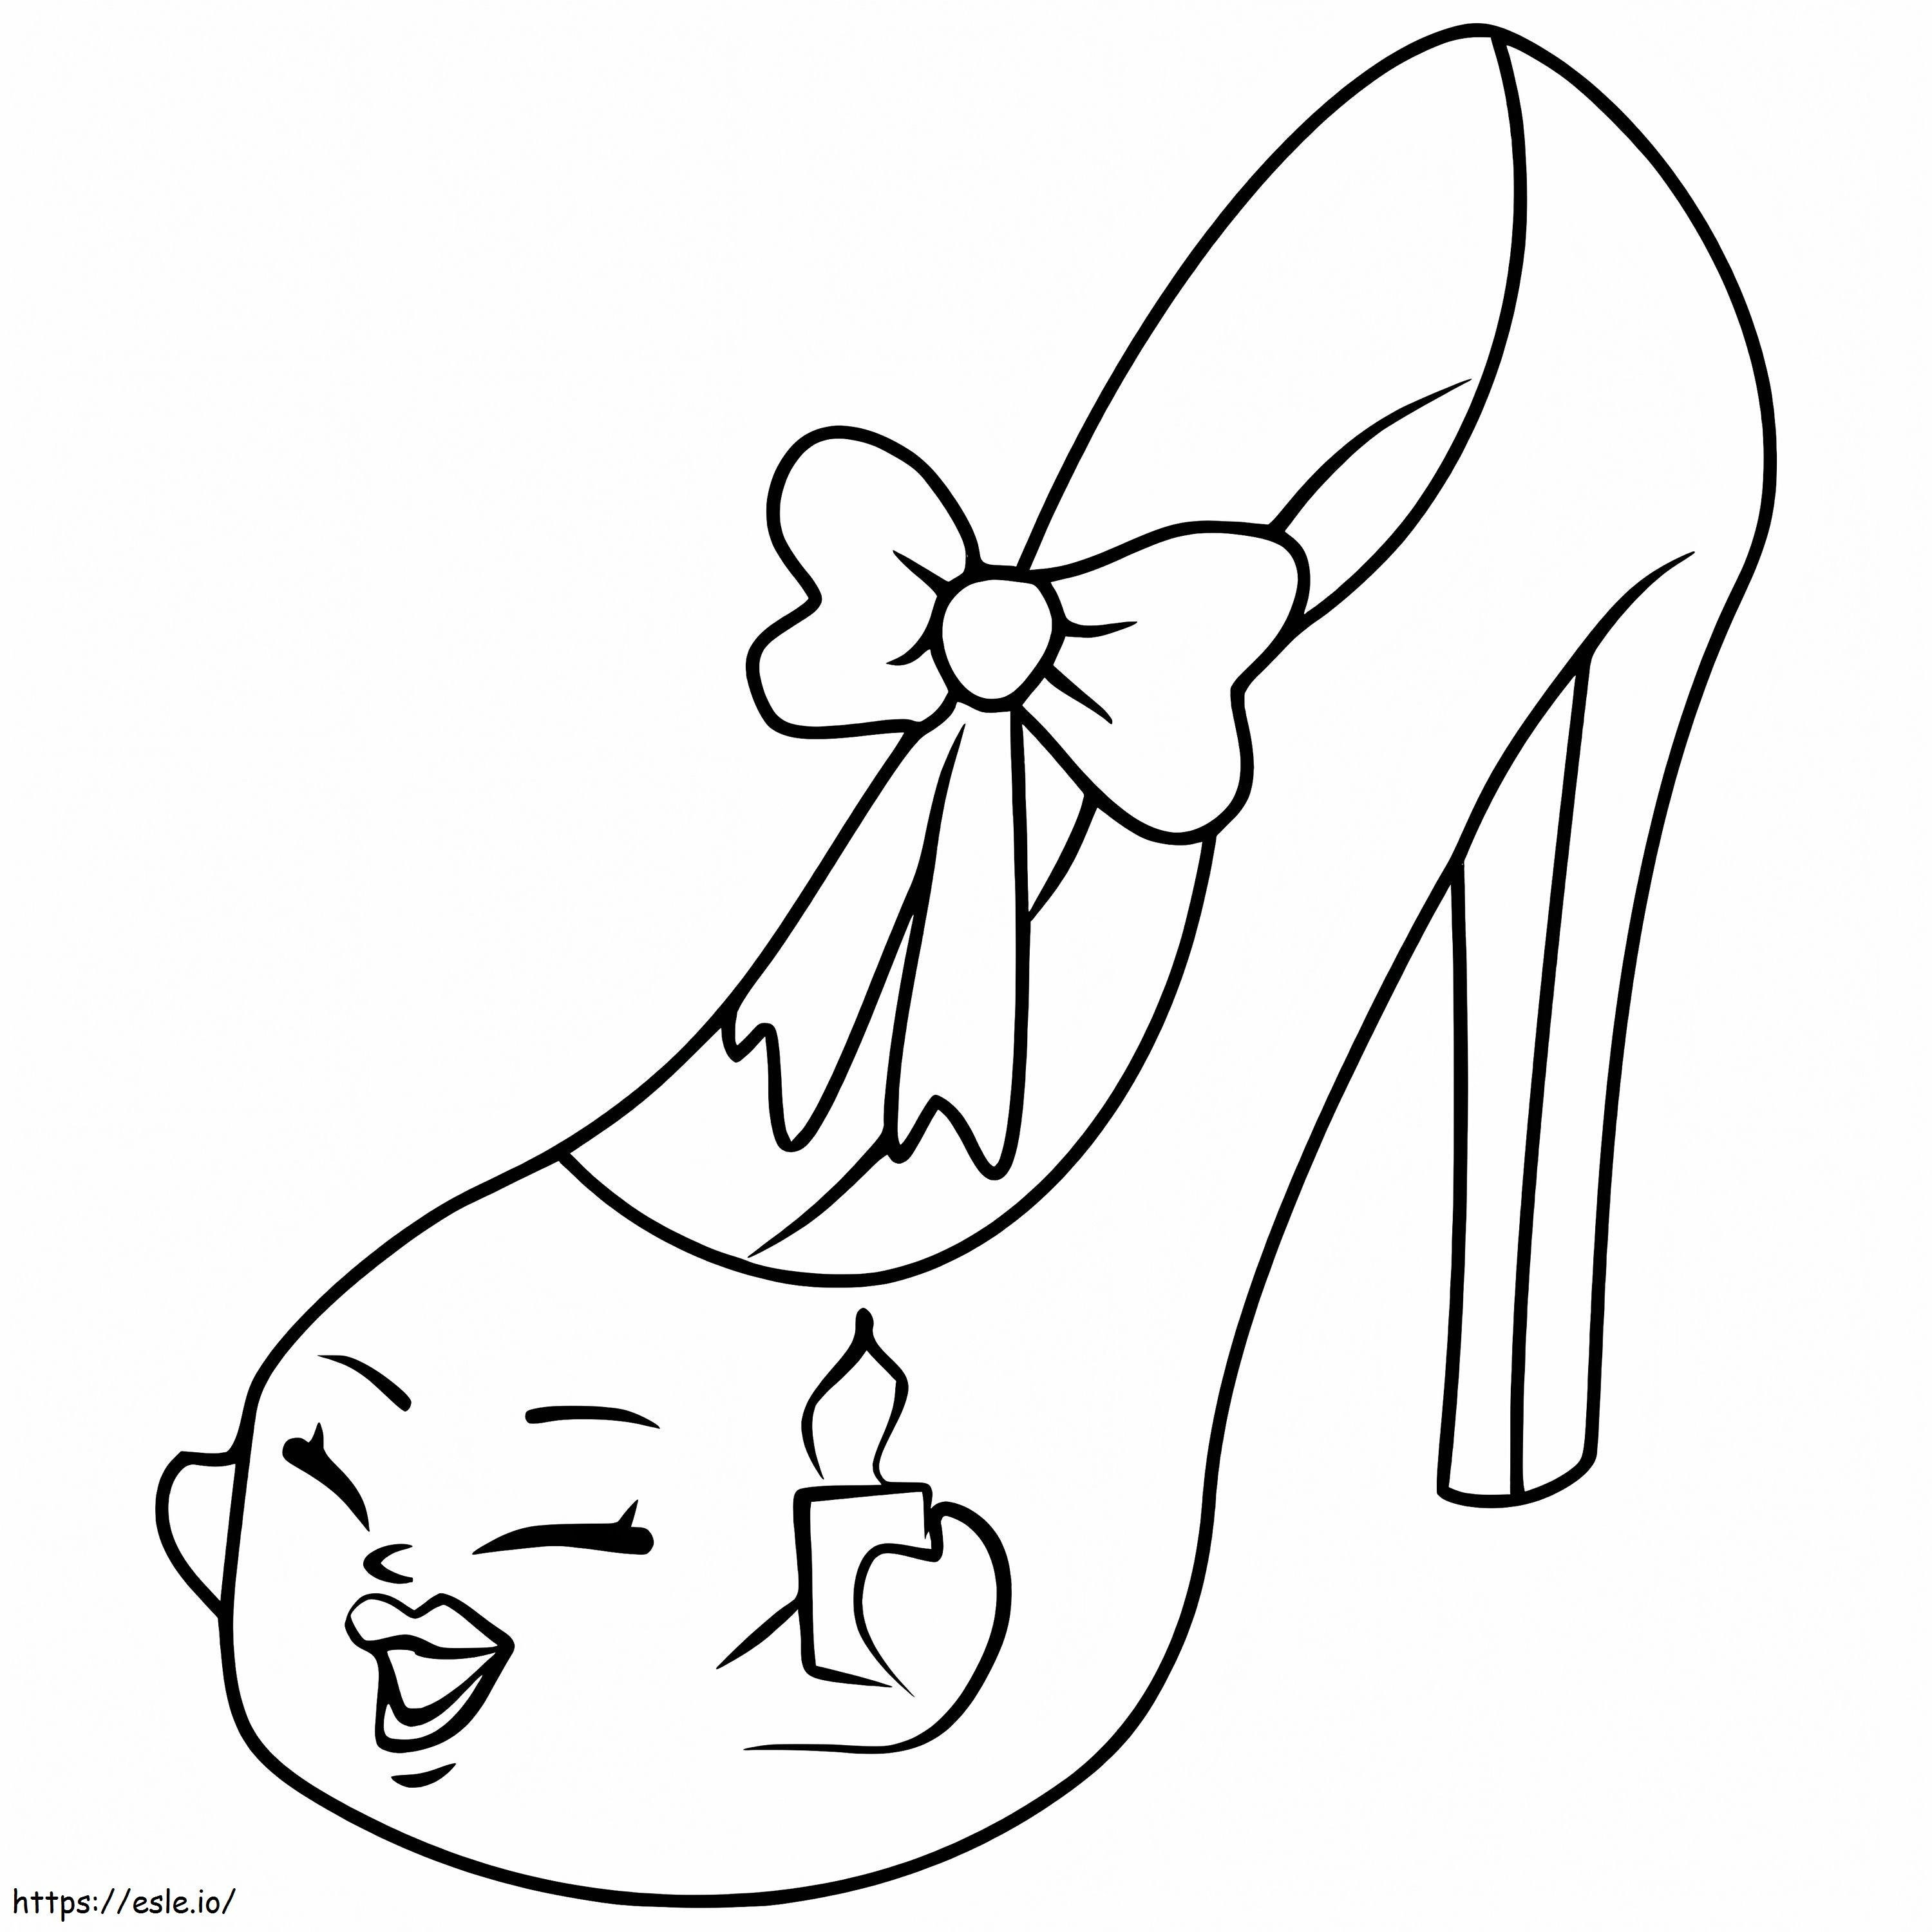 Sepatu Prommy Shopkins Gambar Mewarnai